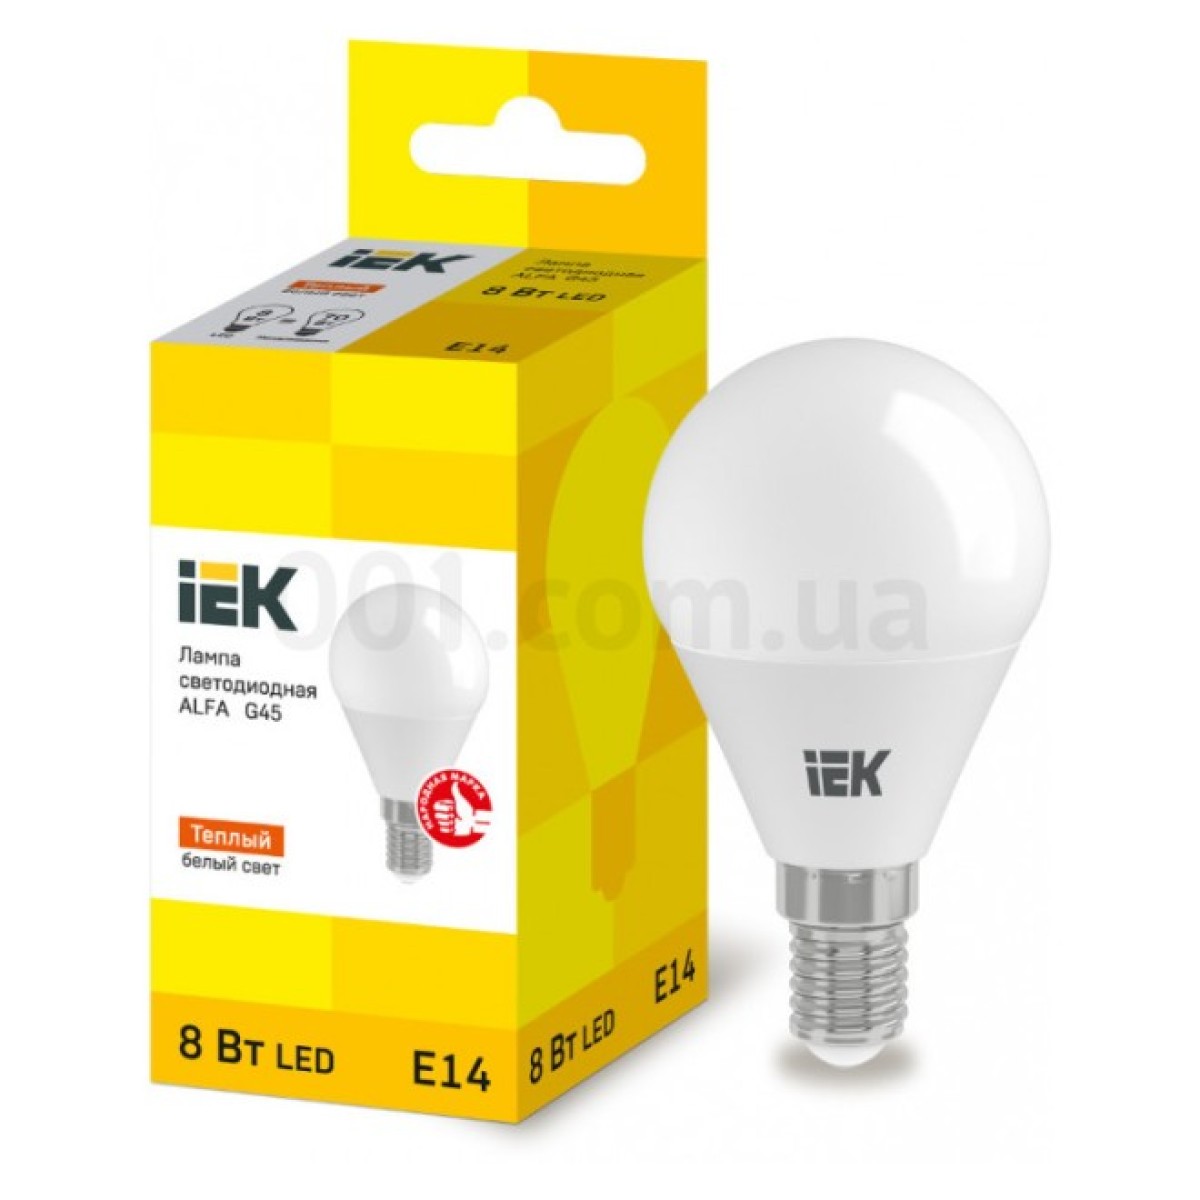 Светодиодная лампа LED ALFA G45 (шар) 8 Вт 230В 3000К E14, IEK 256_256.jpg